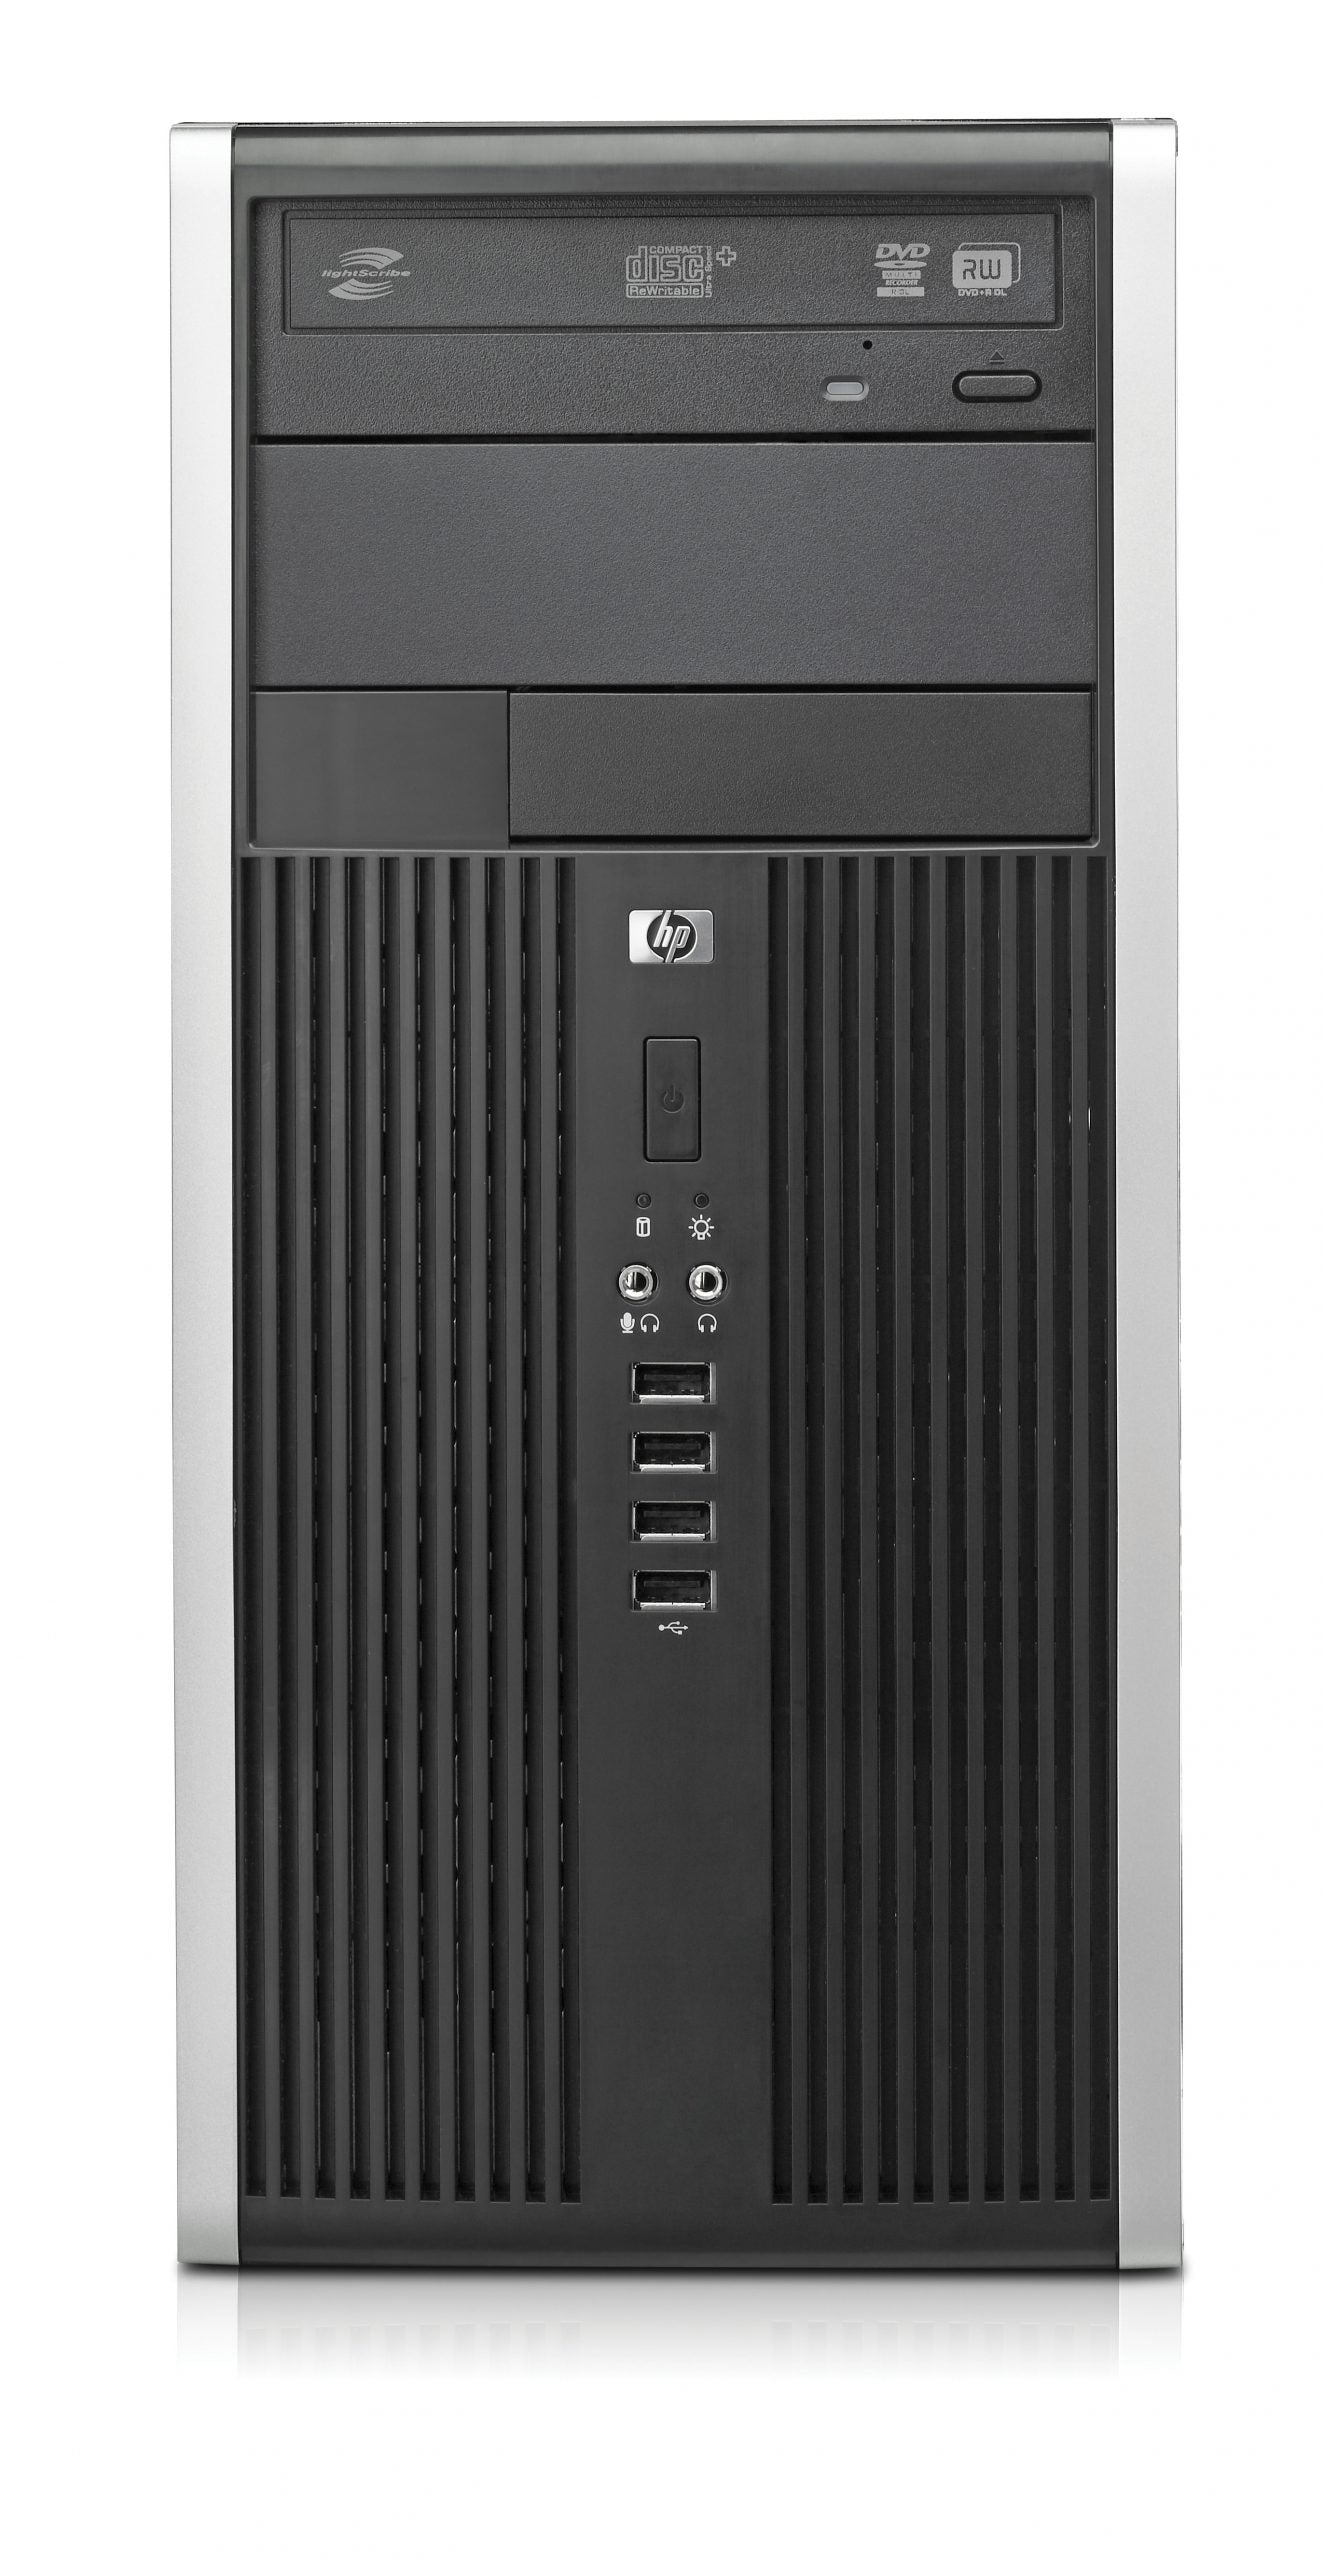 HP Compaq Pro 6300 MicroTower | Intel Pentium G645 2.9Ghz | 4Gb Ram | 500Gb Hard Disk | Windows 10 Pro